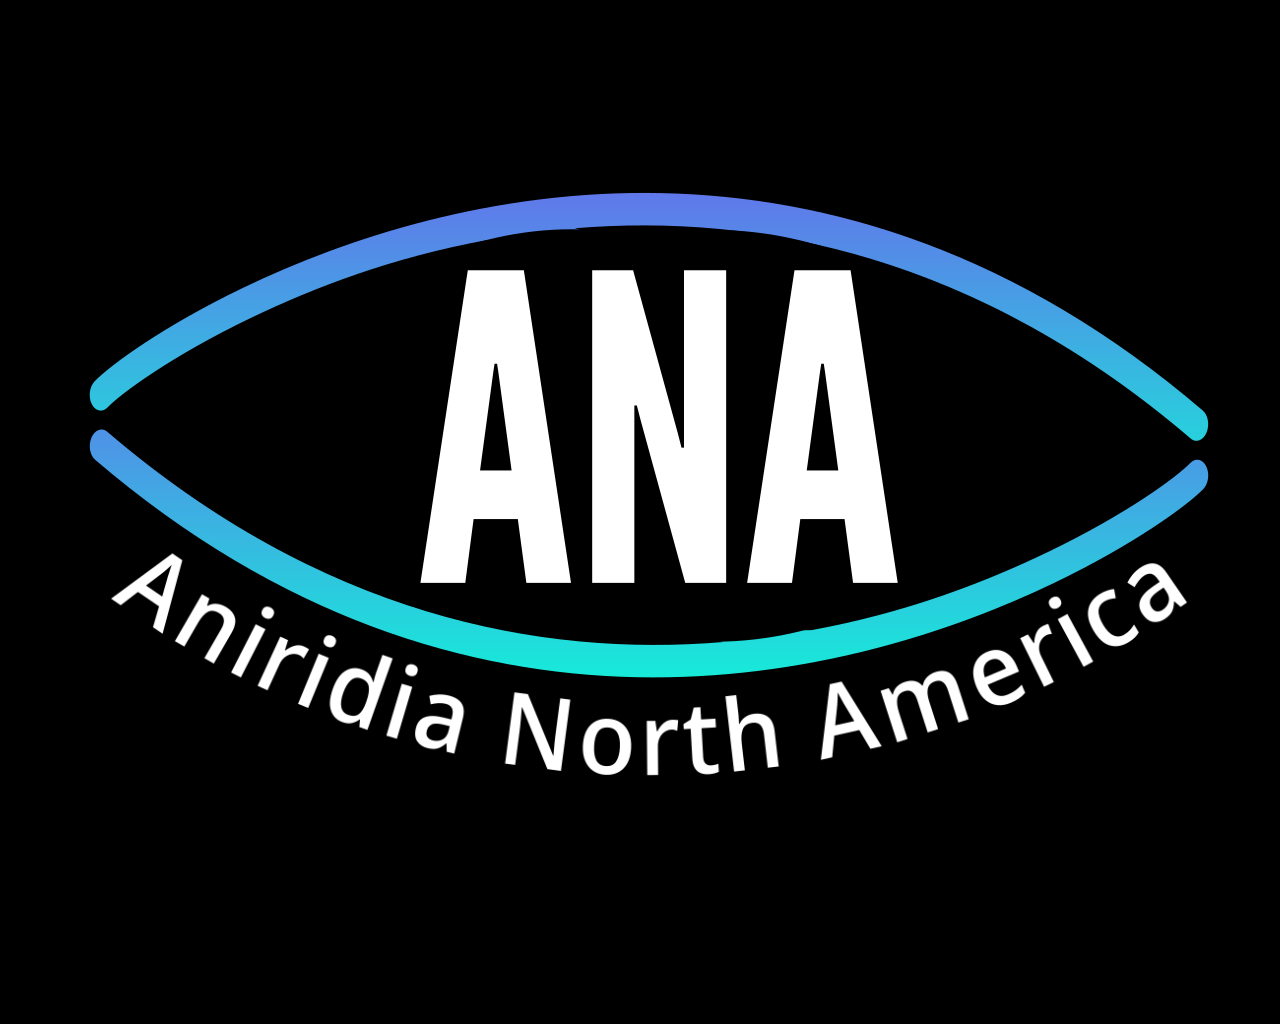 New Aniridia Organization Announced